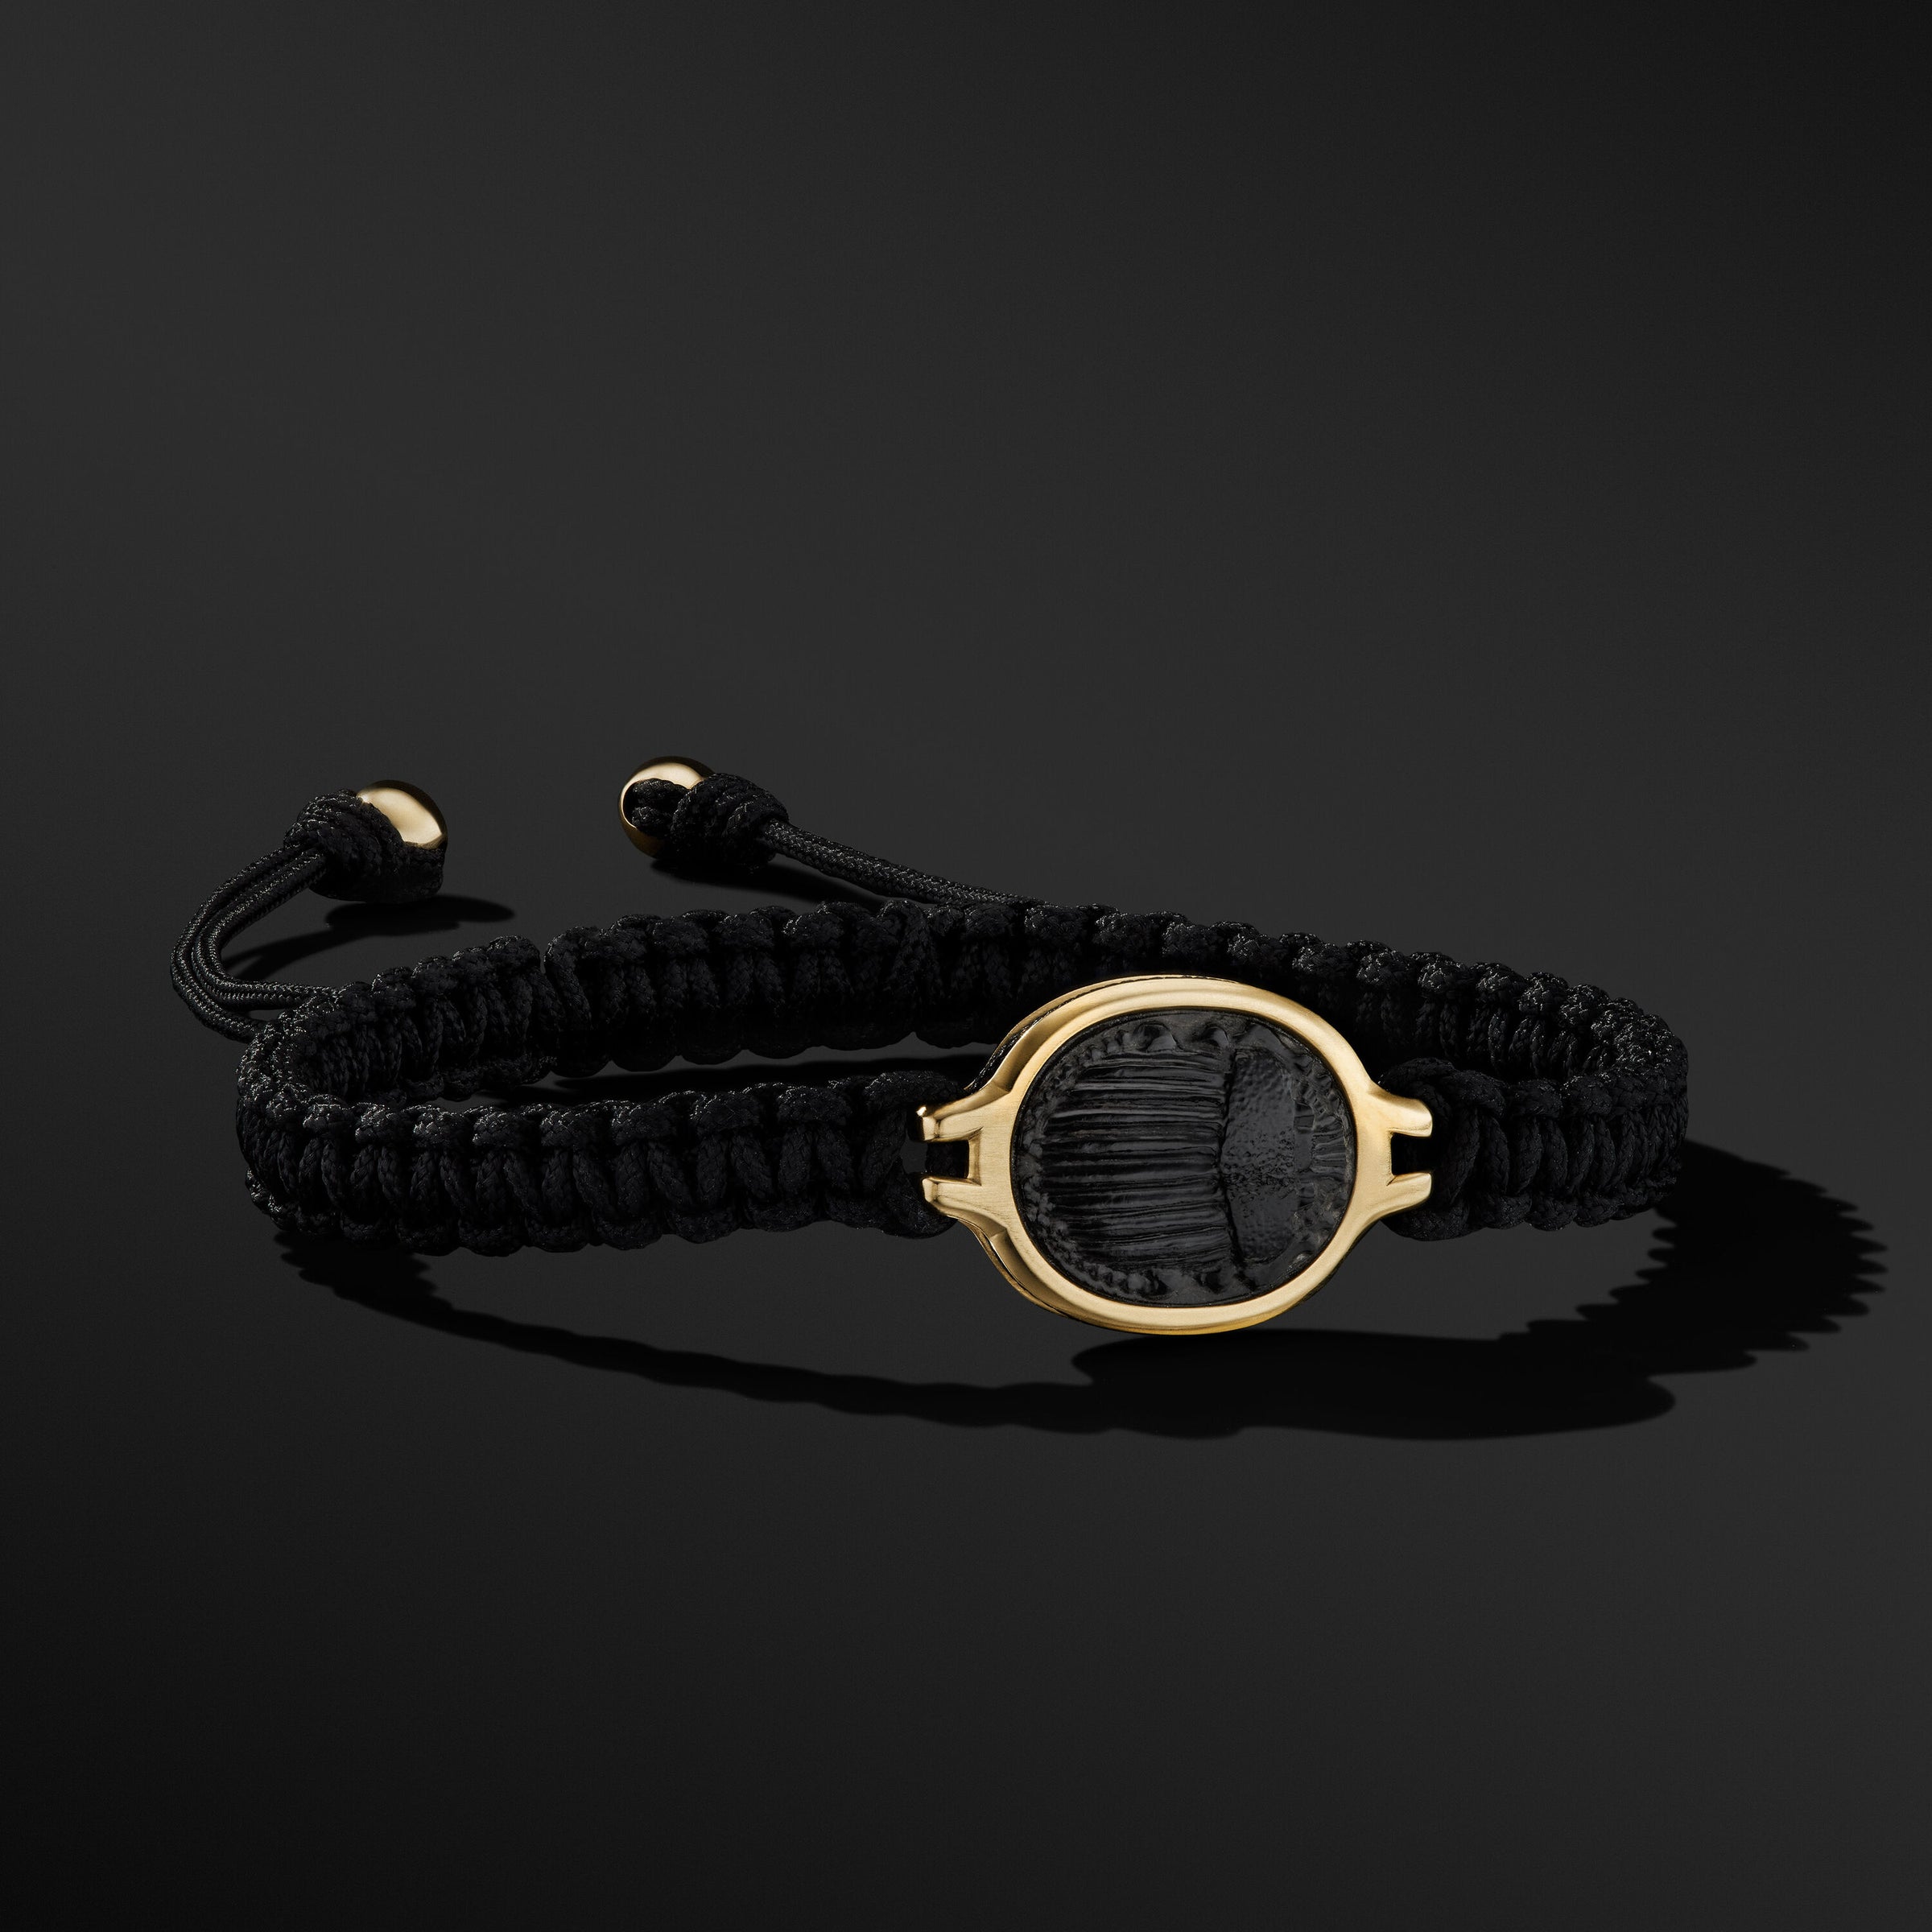 David Yurman Streamline Double Wrap Black Leather Bracelet with 18K Yellow Gold Men's Size Small